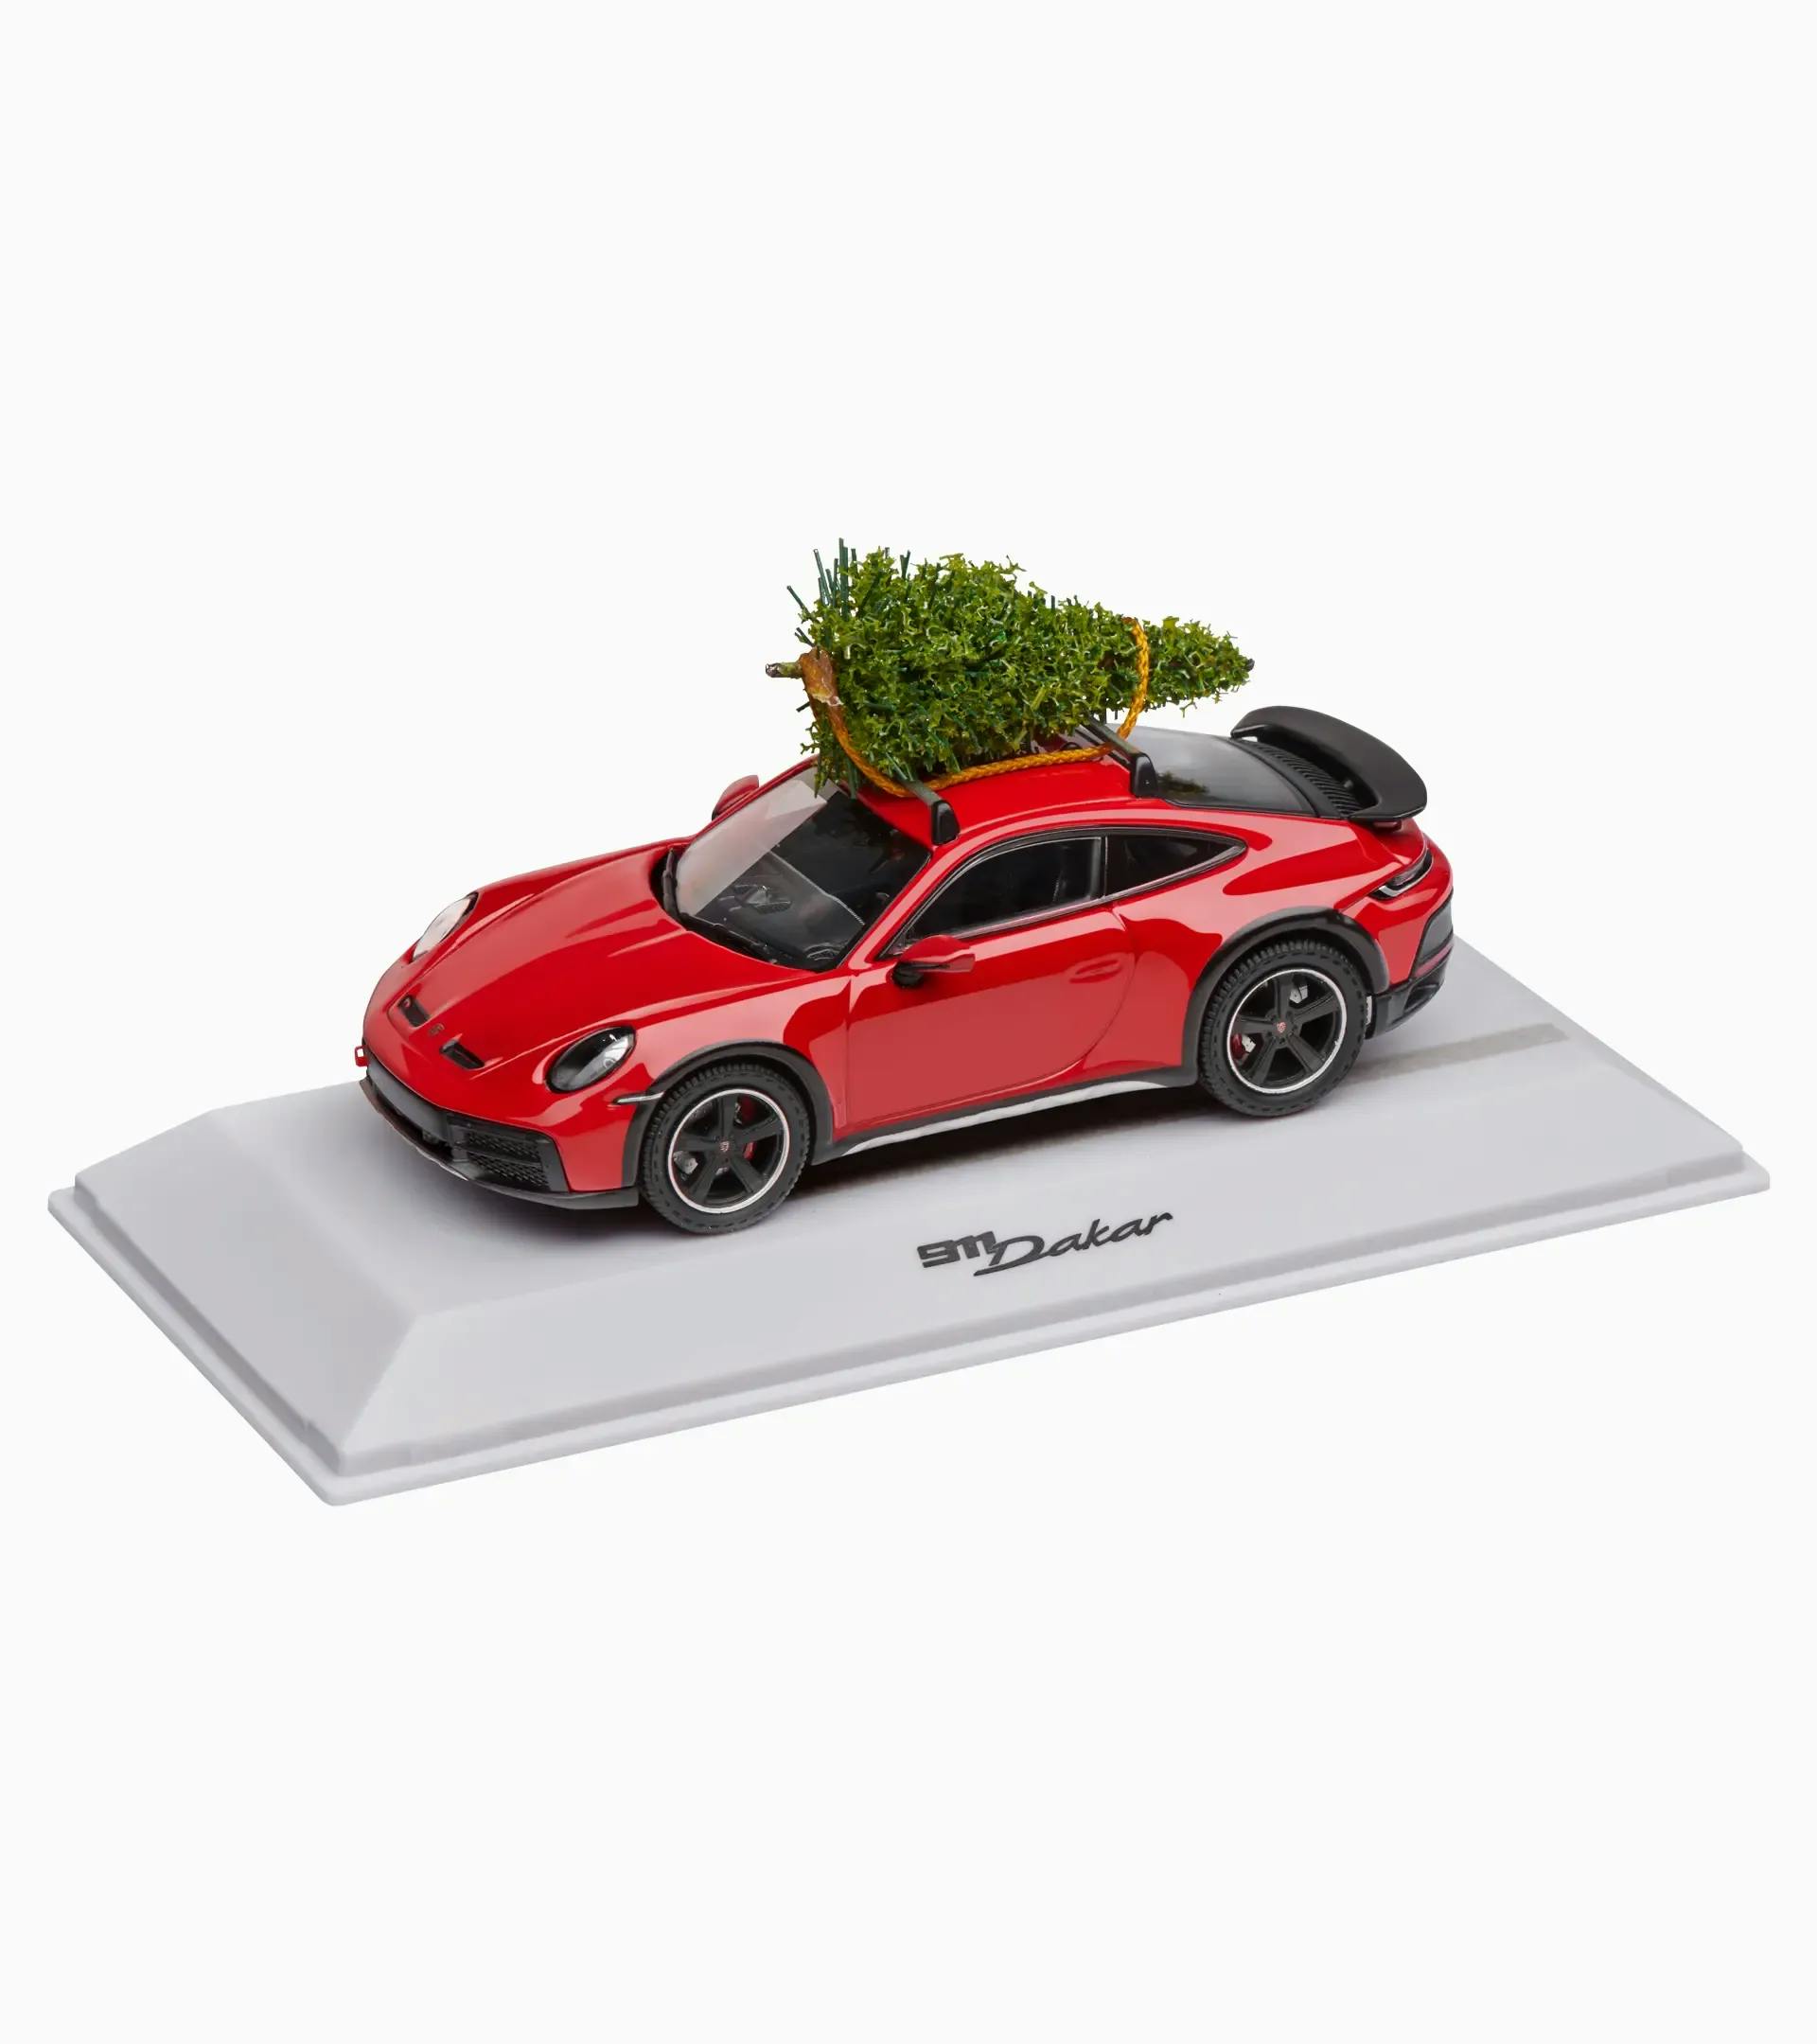 Porsche 911 Dakar (992) with Christmas tree – Christmas